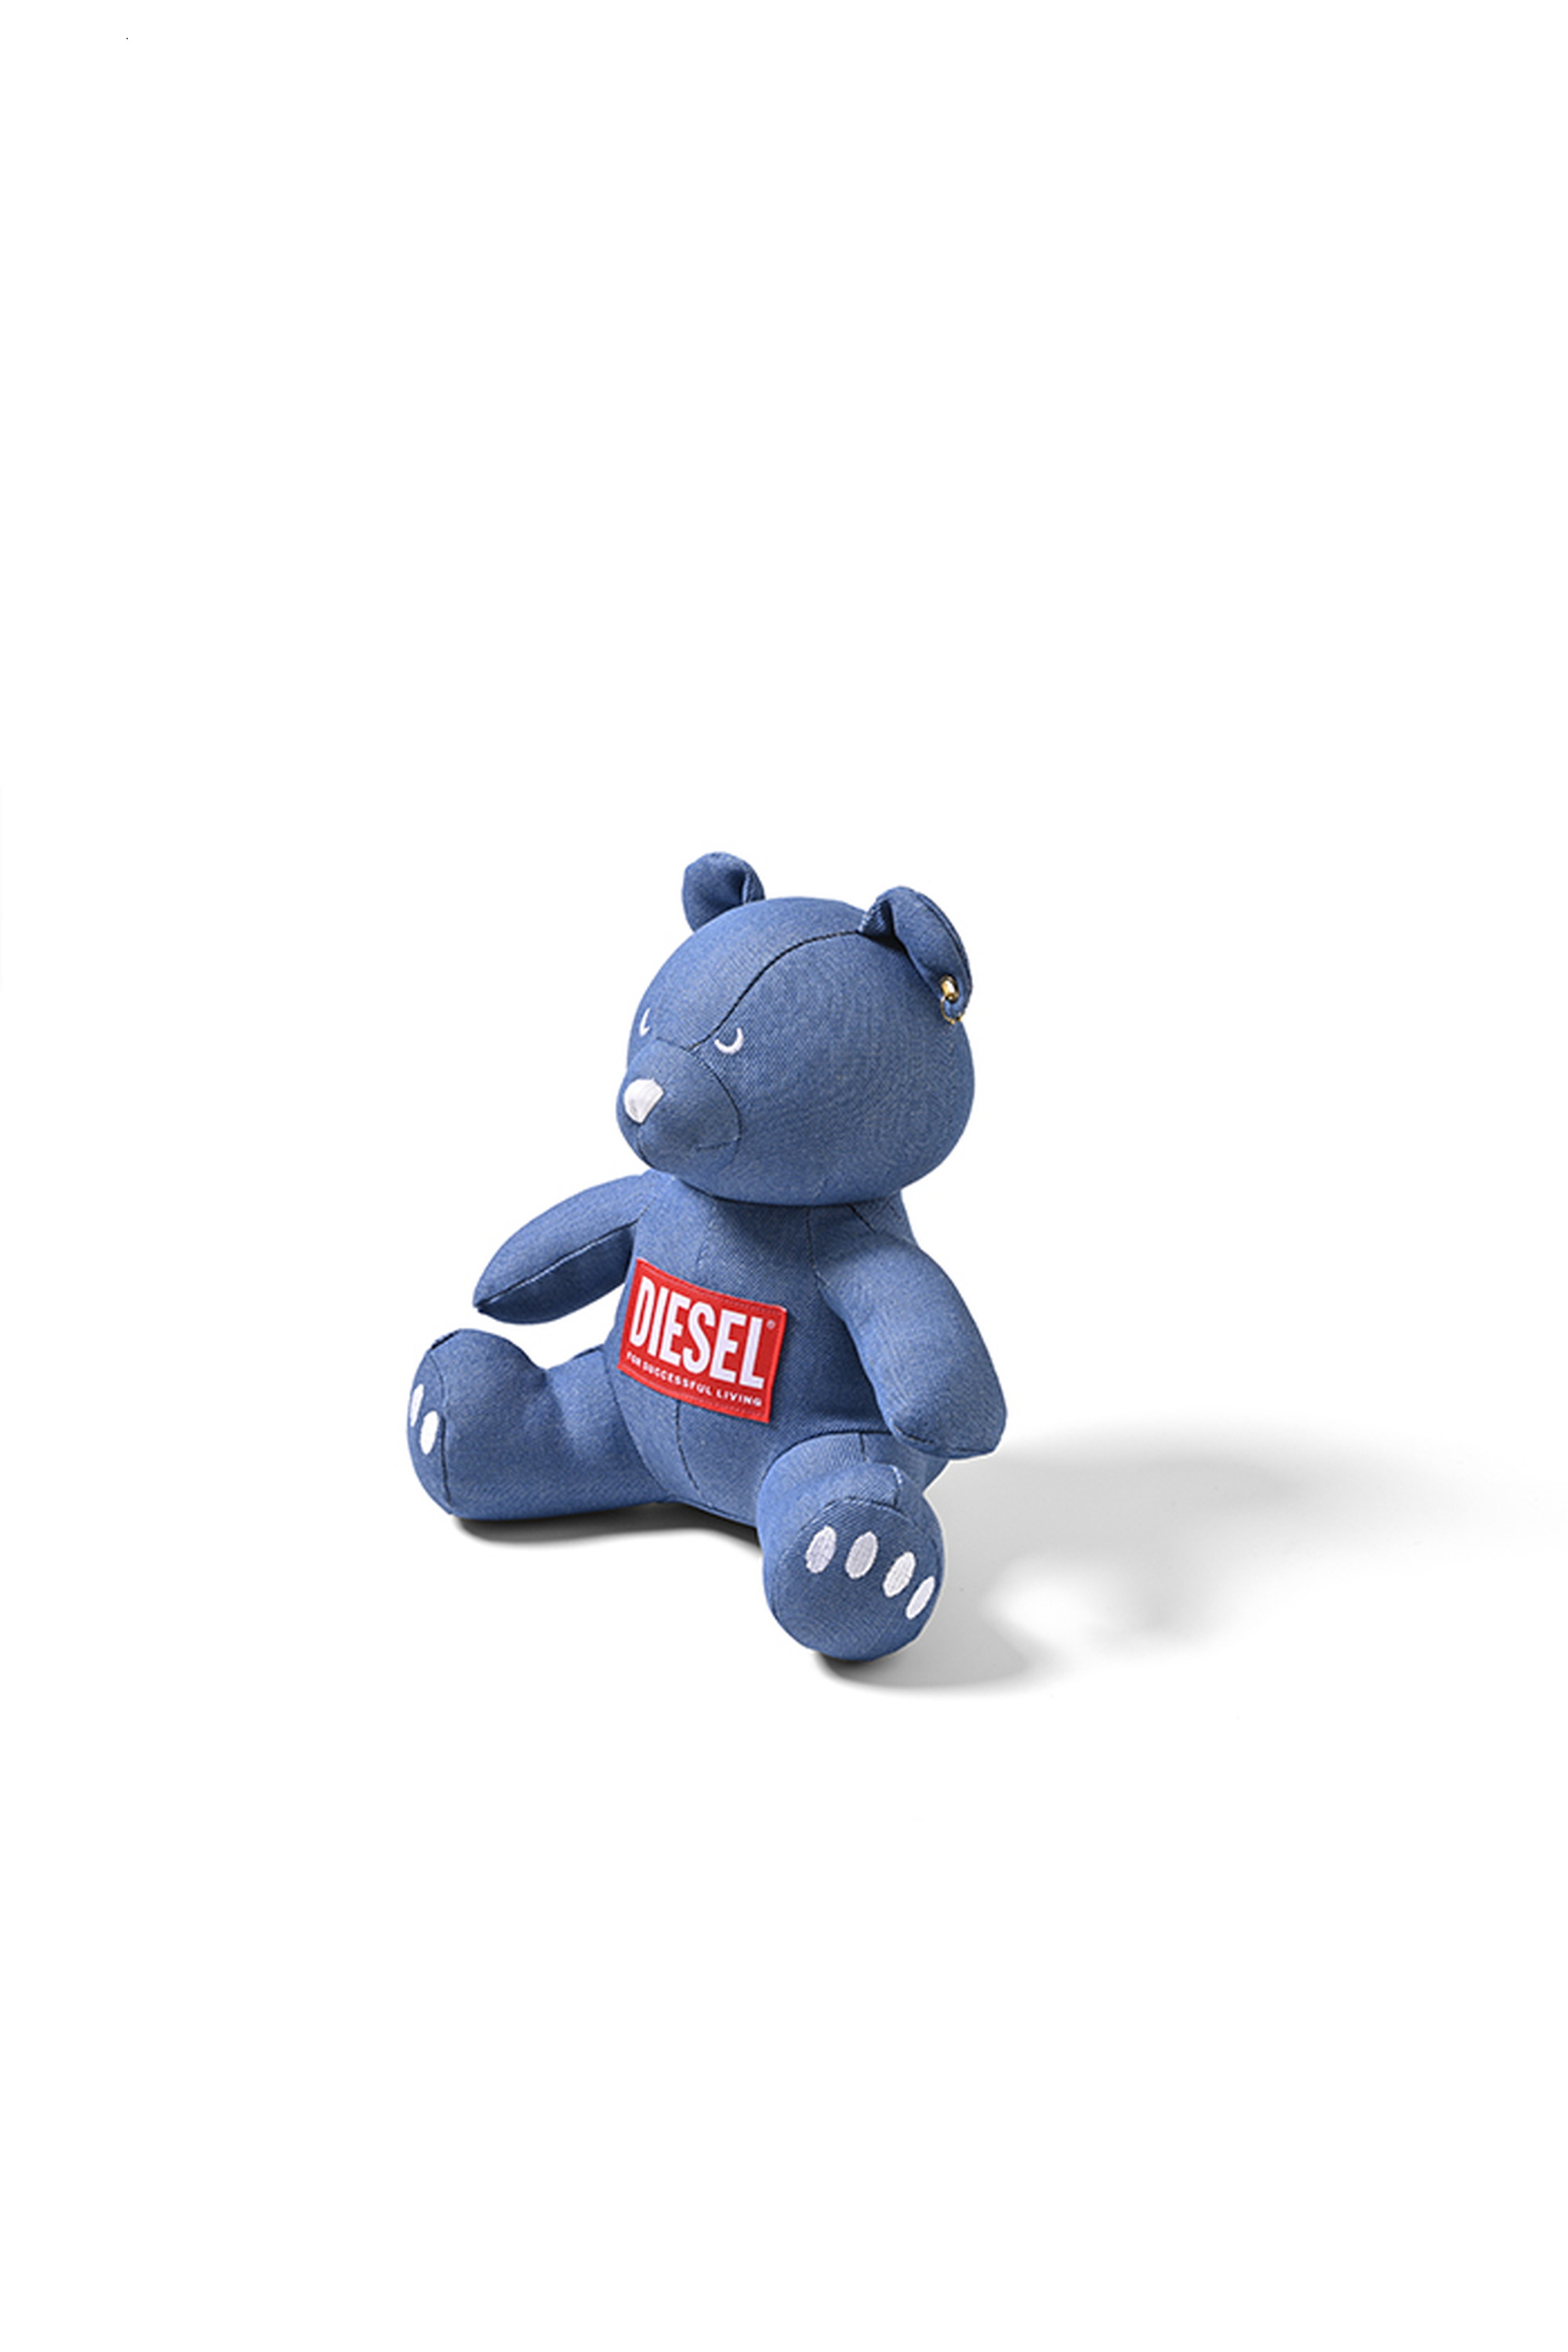 Diesel - DIESEL BEAR (LIGHT BLUE), LIGHT BLUE・UNI - Image 2